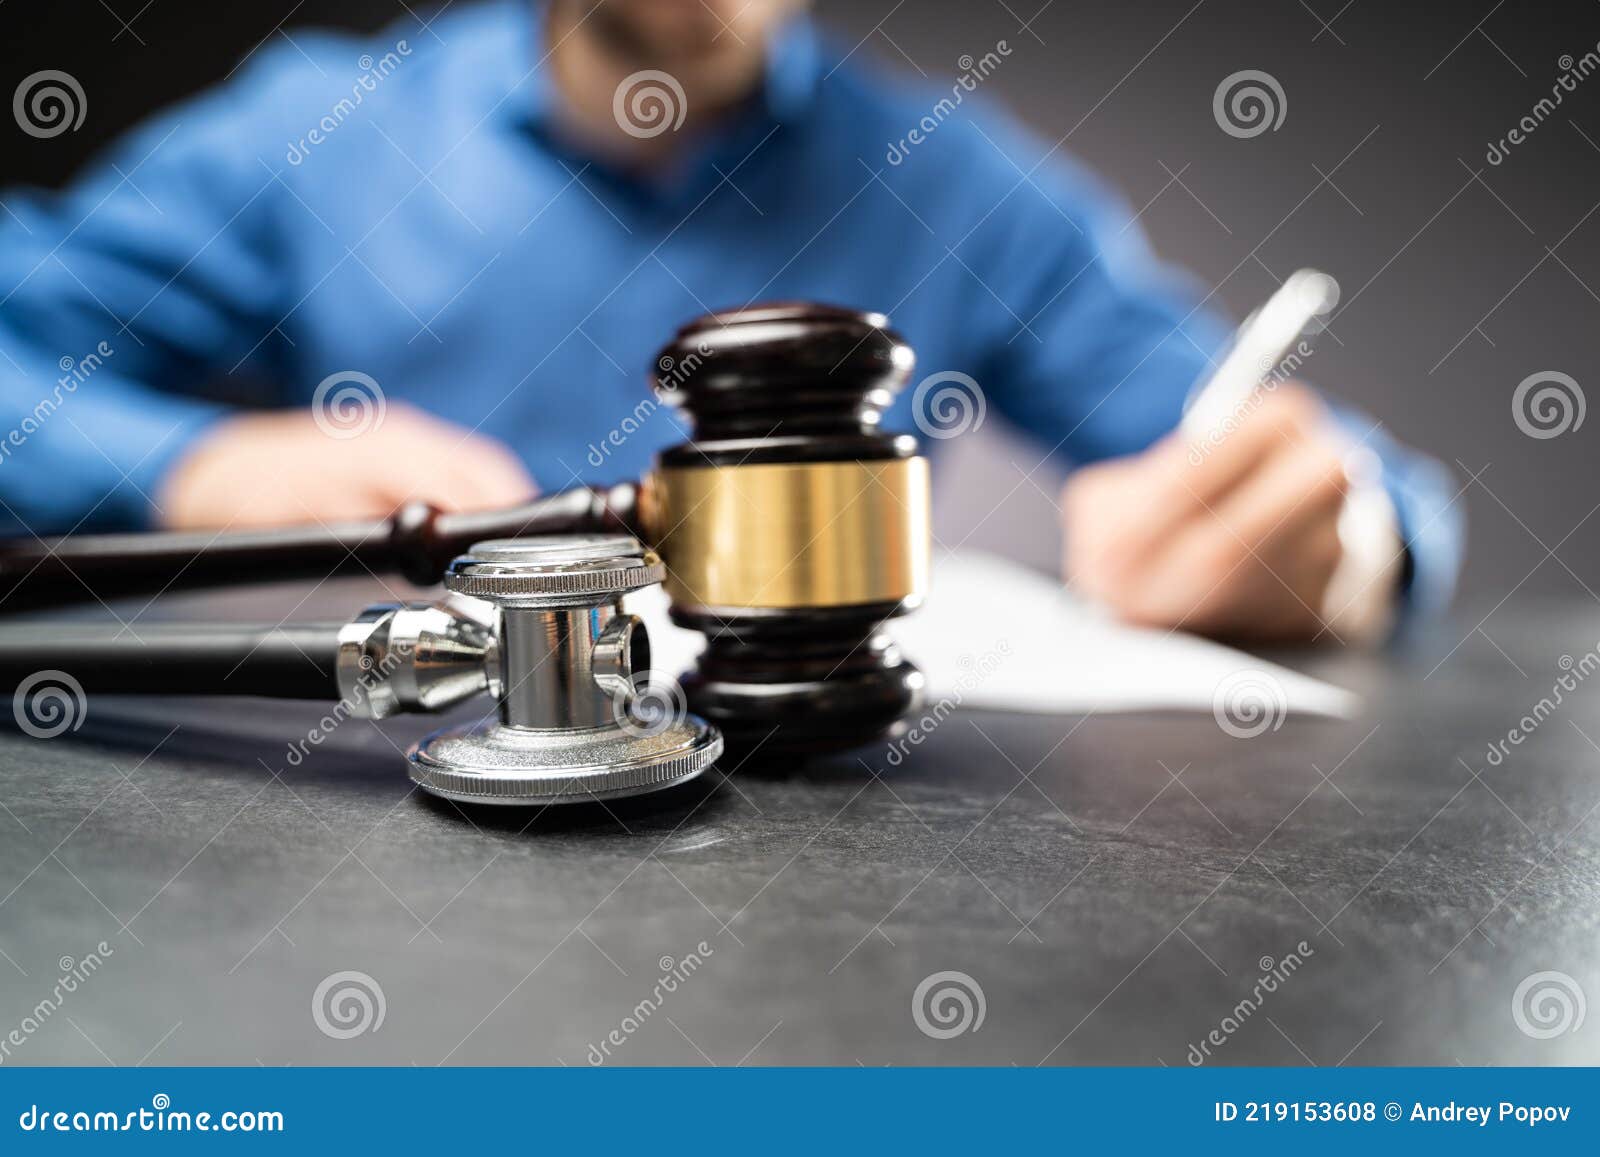 medical malpractice litigation law. lawyer or judge